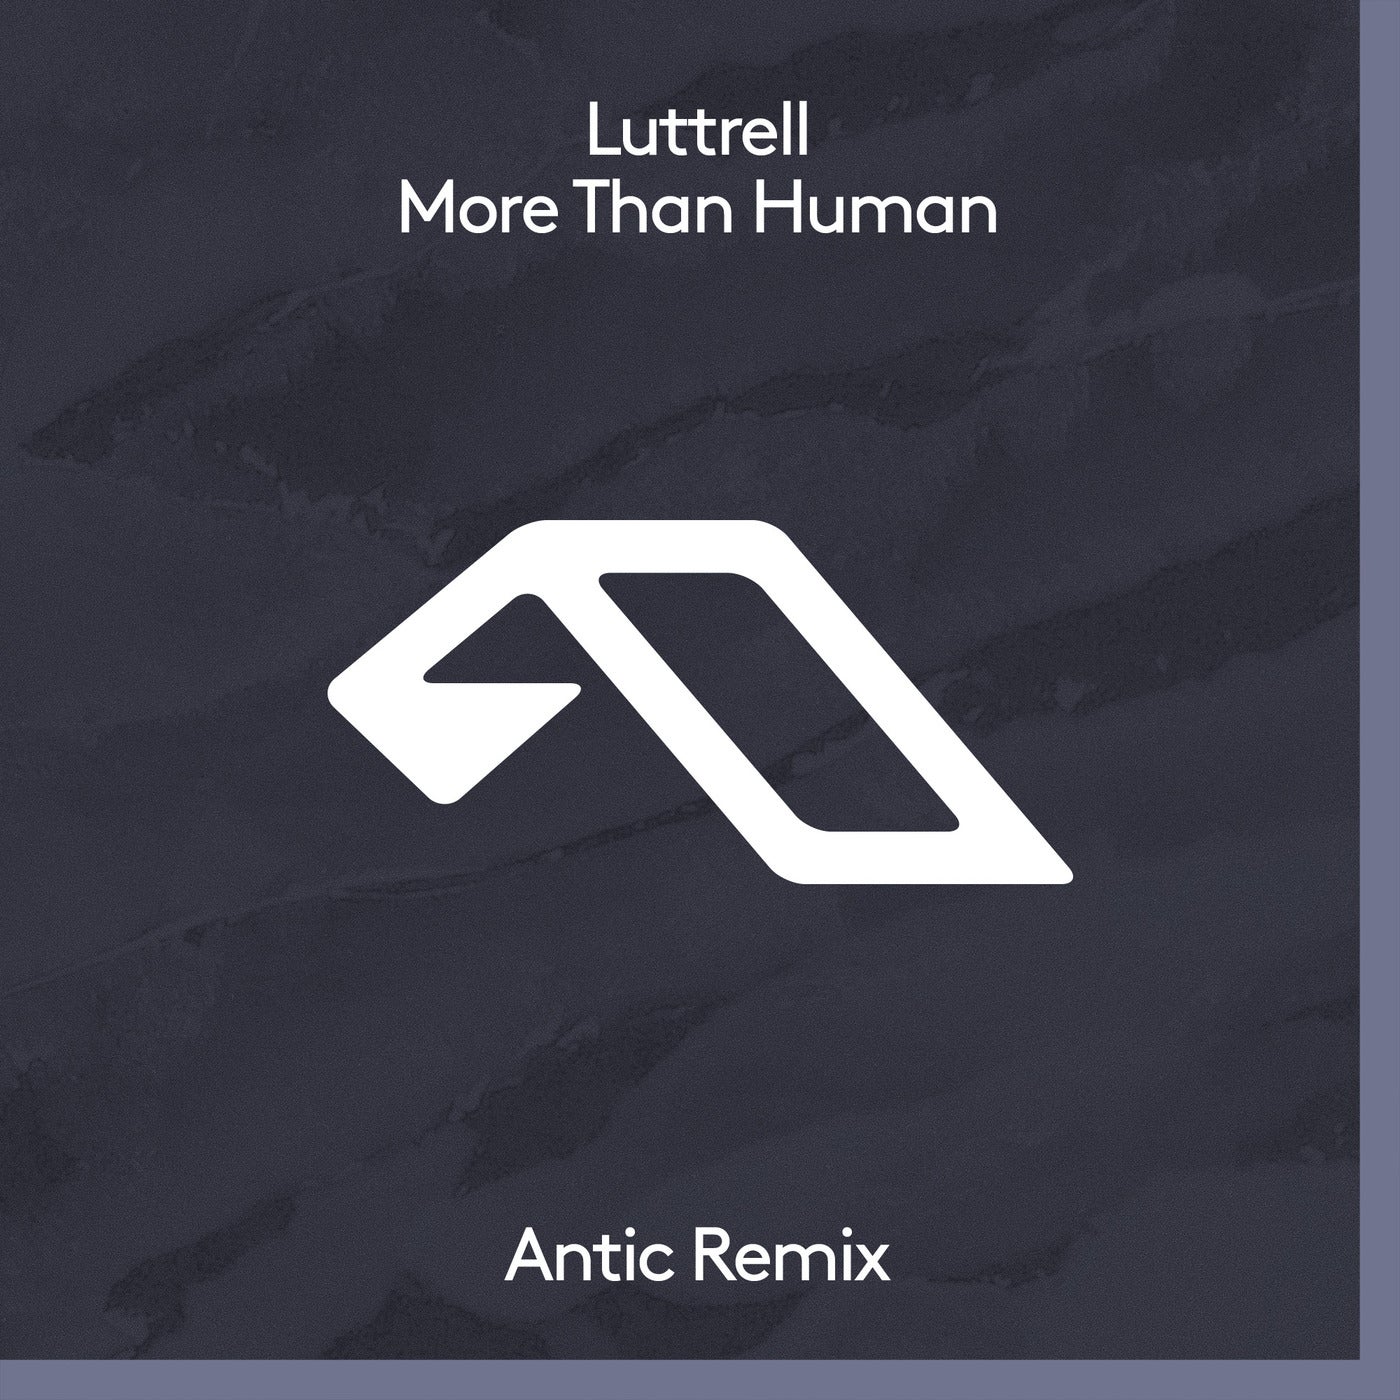 More Than Human (Antic Remix)